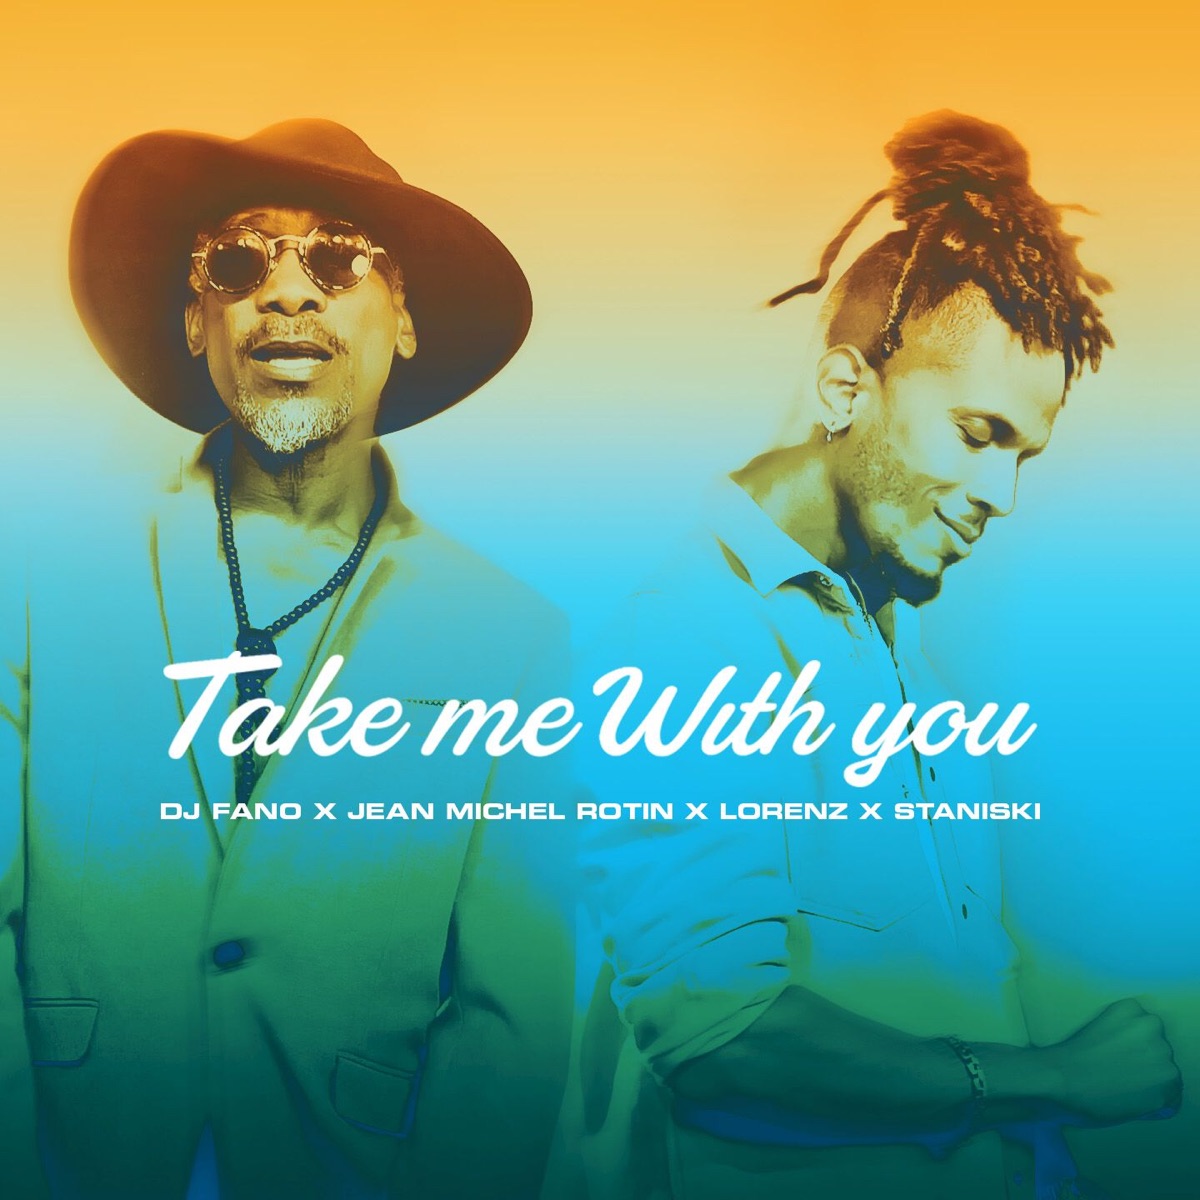 Take Me With You - Single by DJ Fano, Staniski, LORENZ & Jean-Michel Rotin  on Apple Music